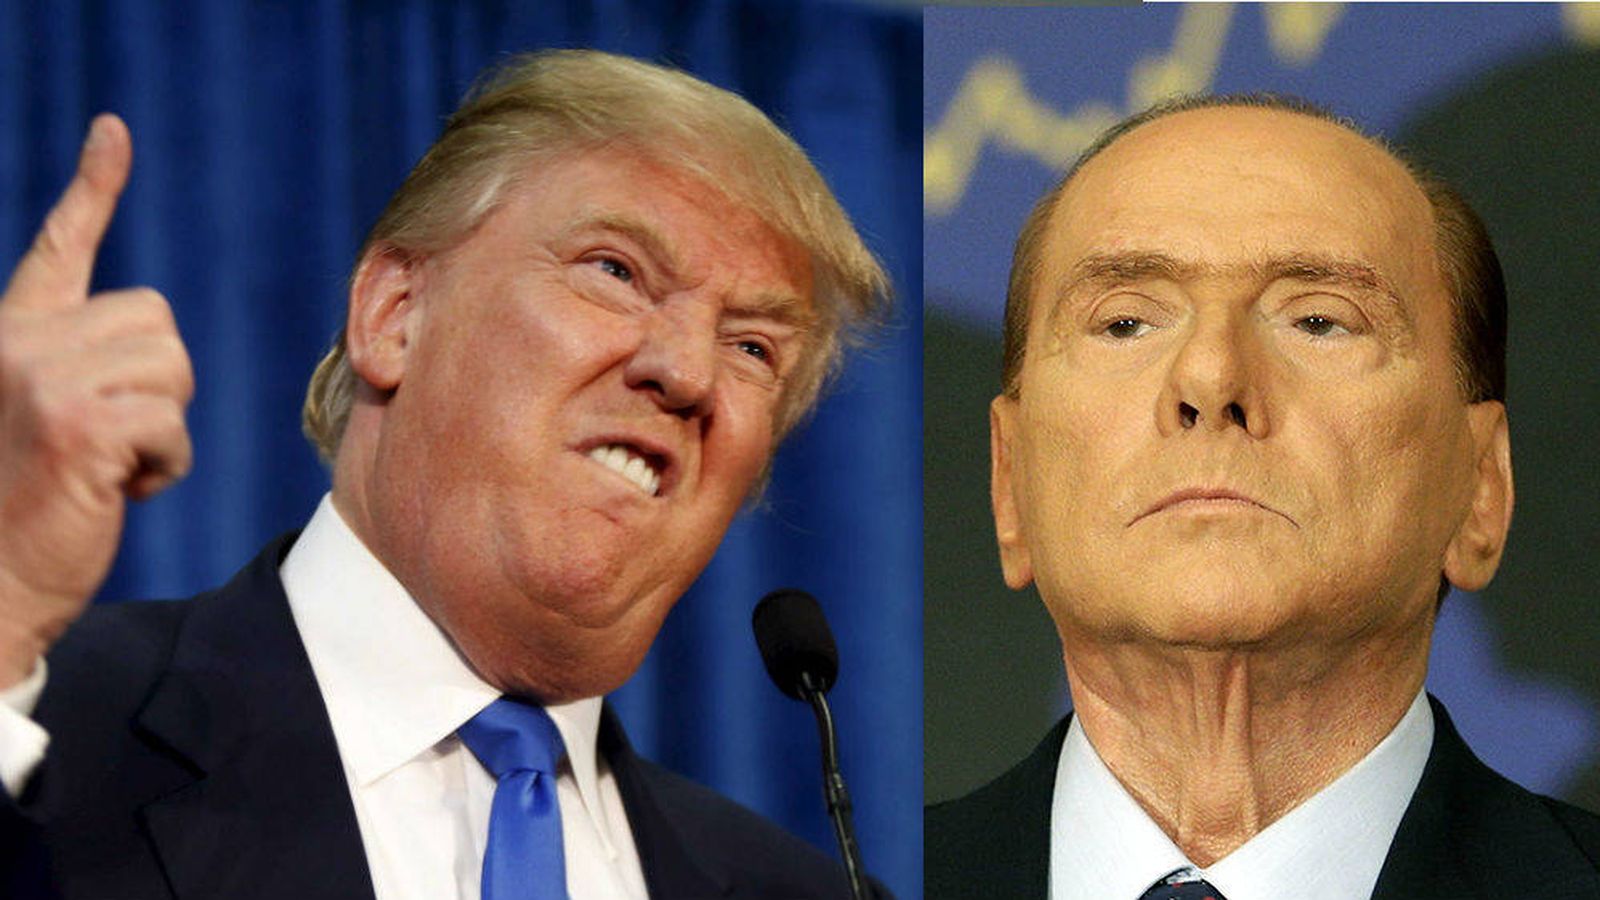 Foto: El candidato republicano Donald Trump junto al ex primer ministro italiano Silvio Berlusconi (El Confidencial).